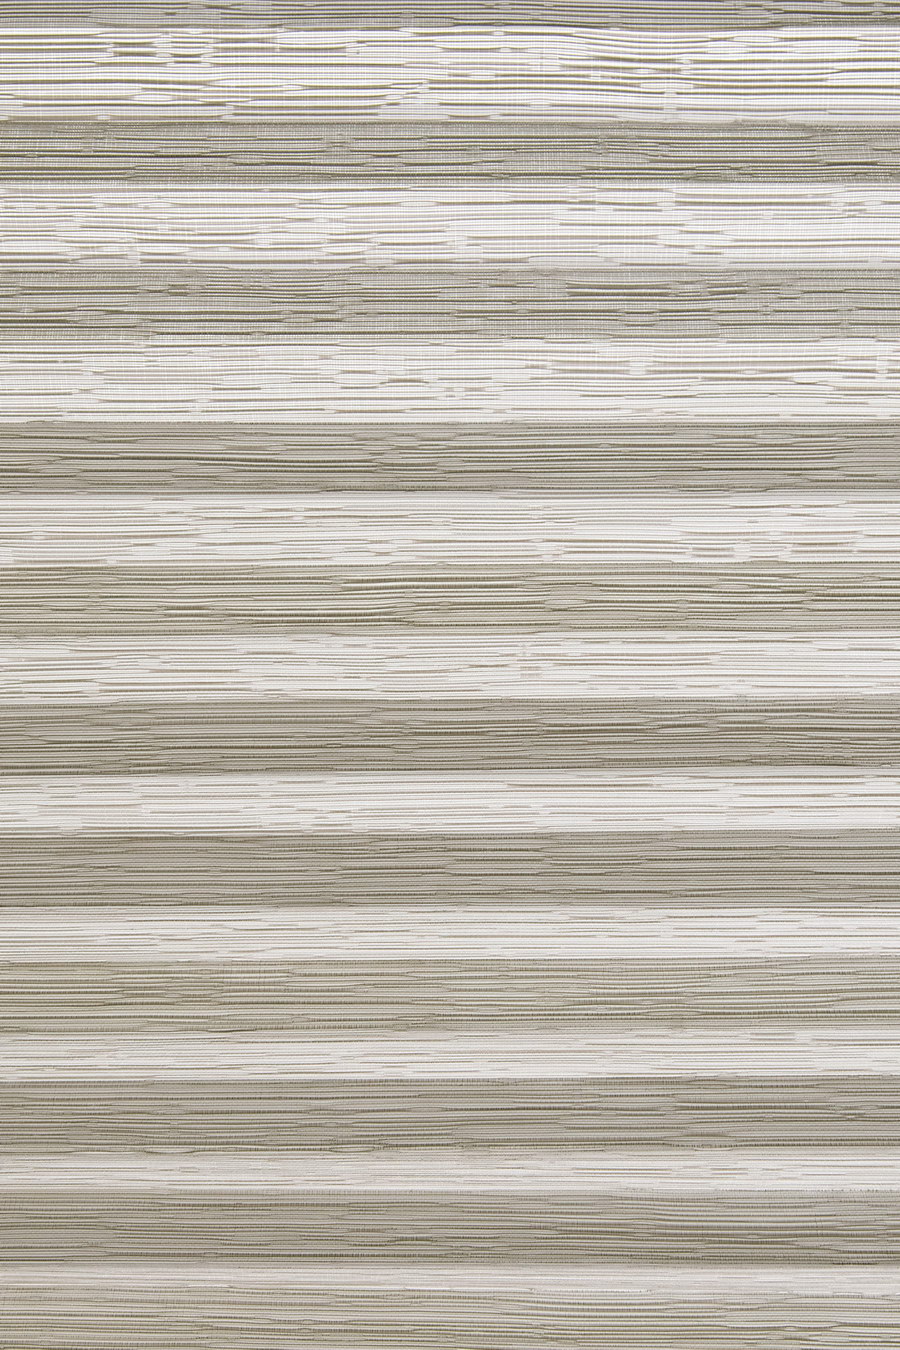 Ткань MIRROR grey-wood 30096 для штор плиссе